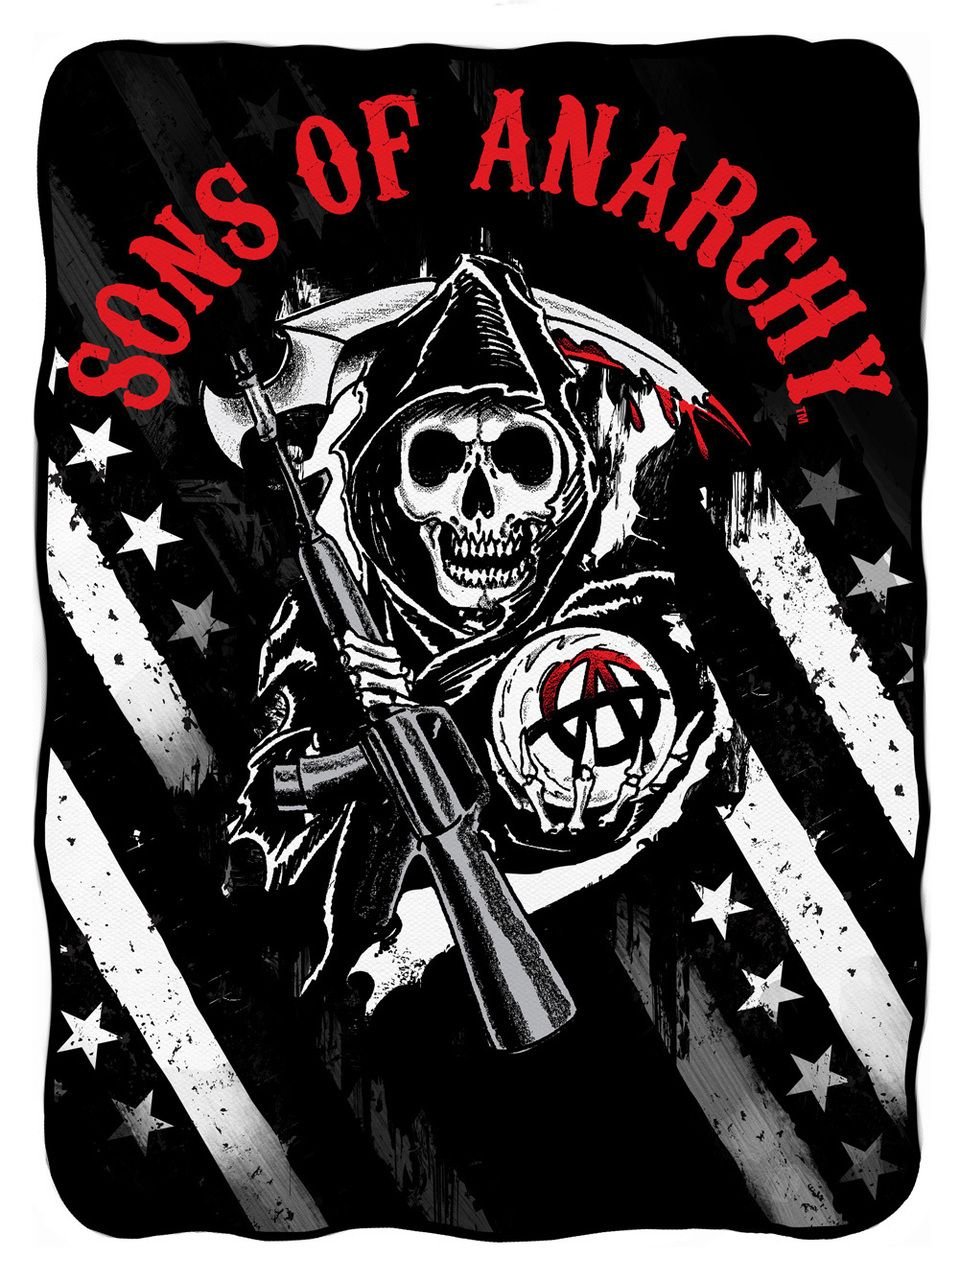 Santa muerte сыны анархии